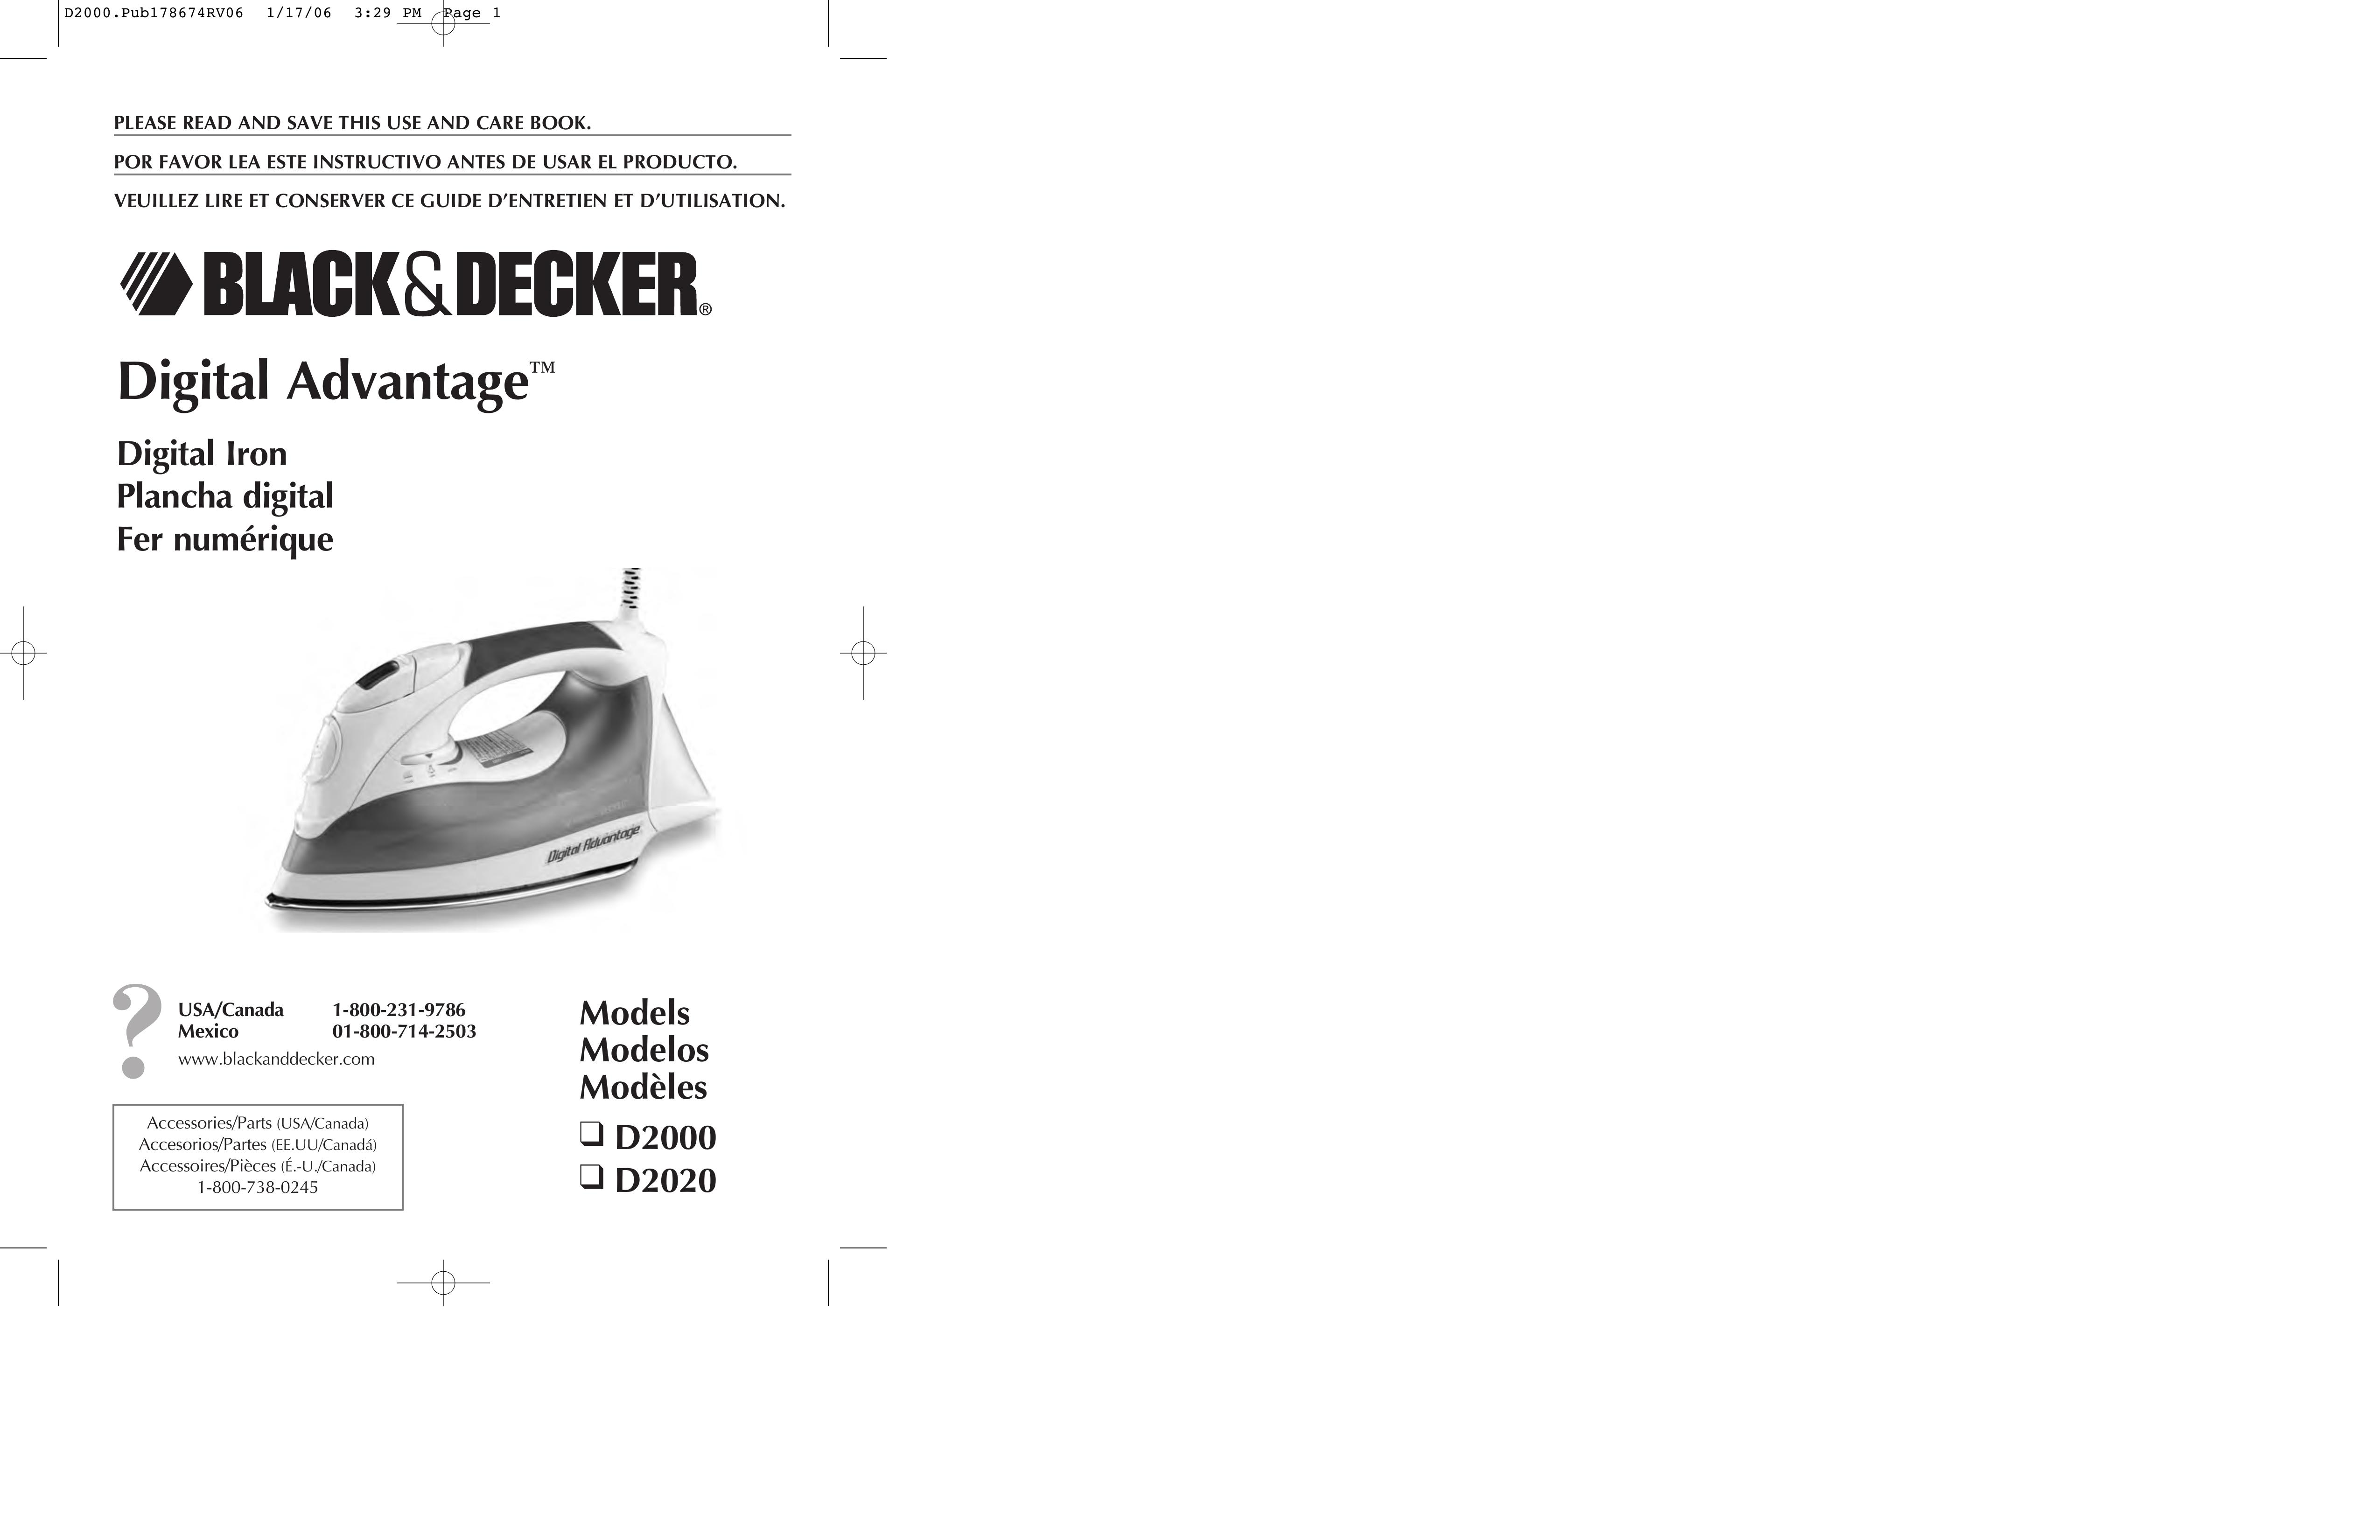 Black & Decker D2020 Iron User Manual (Page 1)